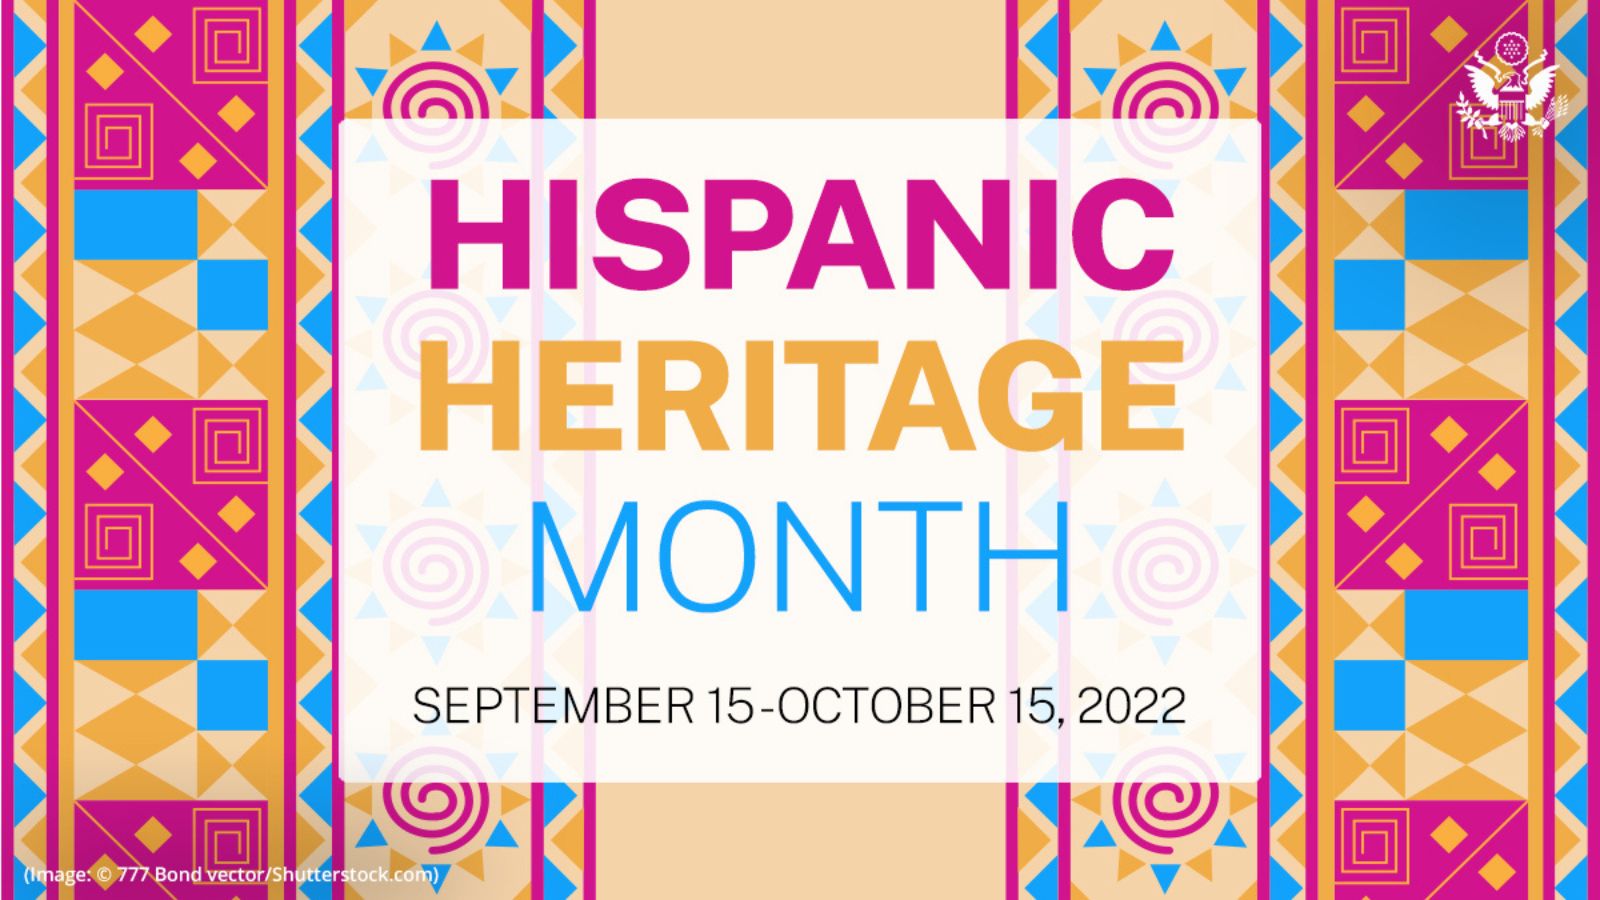 Hispanic Heritage Month: September 15-October 15, 2022